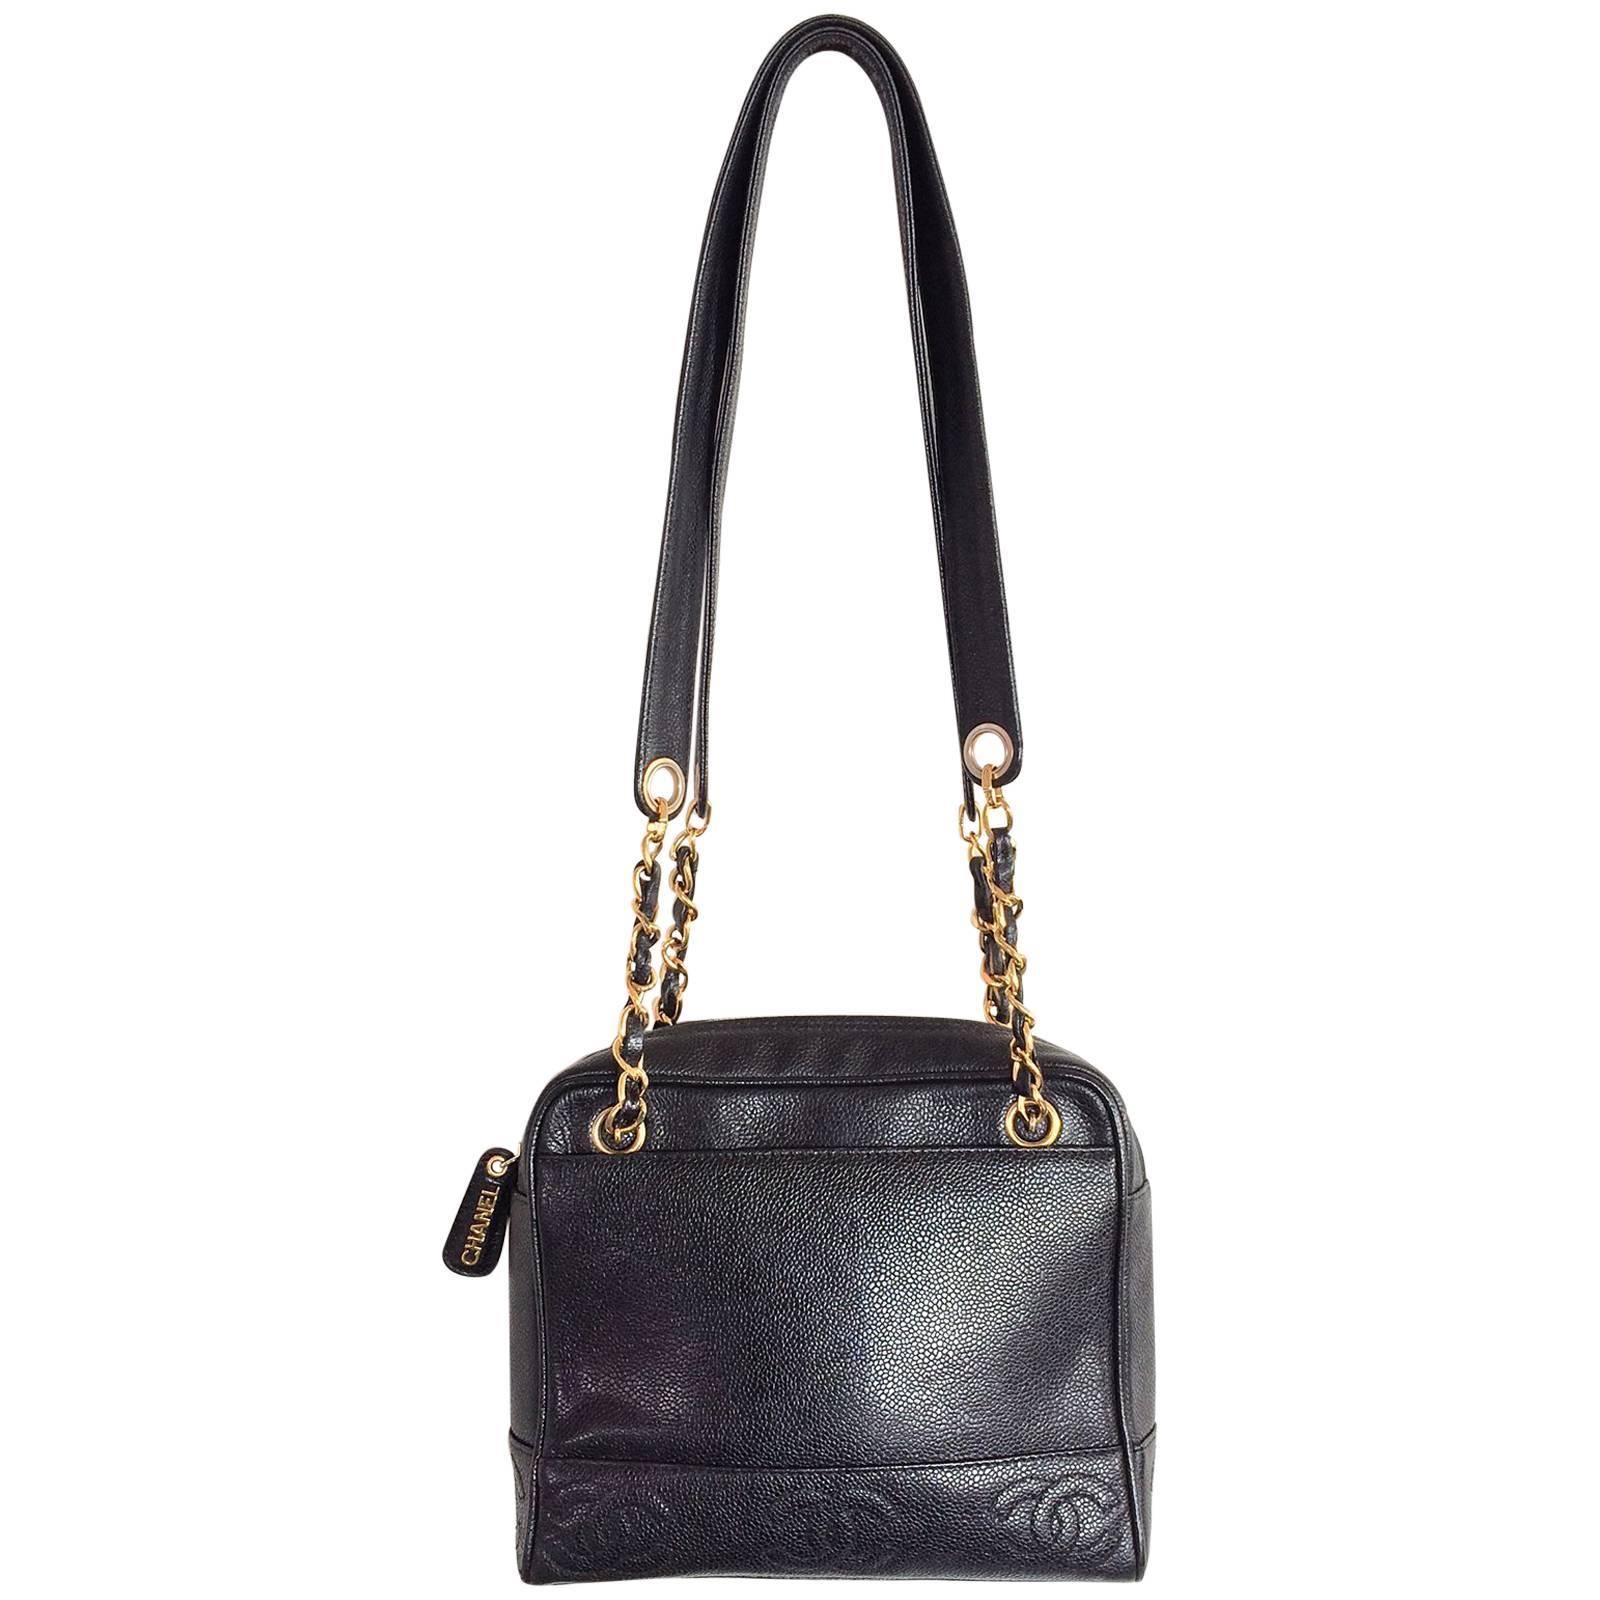 Chanel black caviar leather crossbody bag handbag